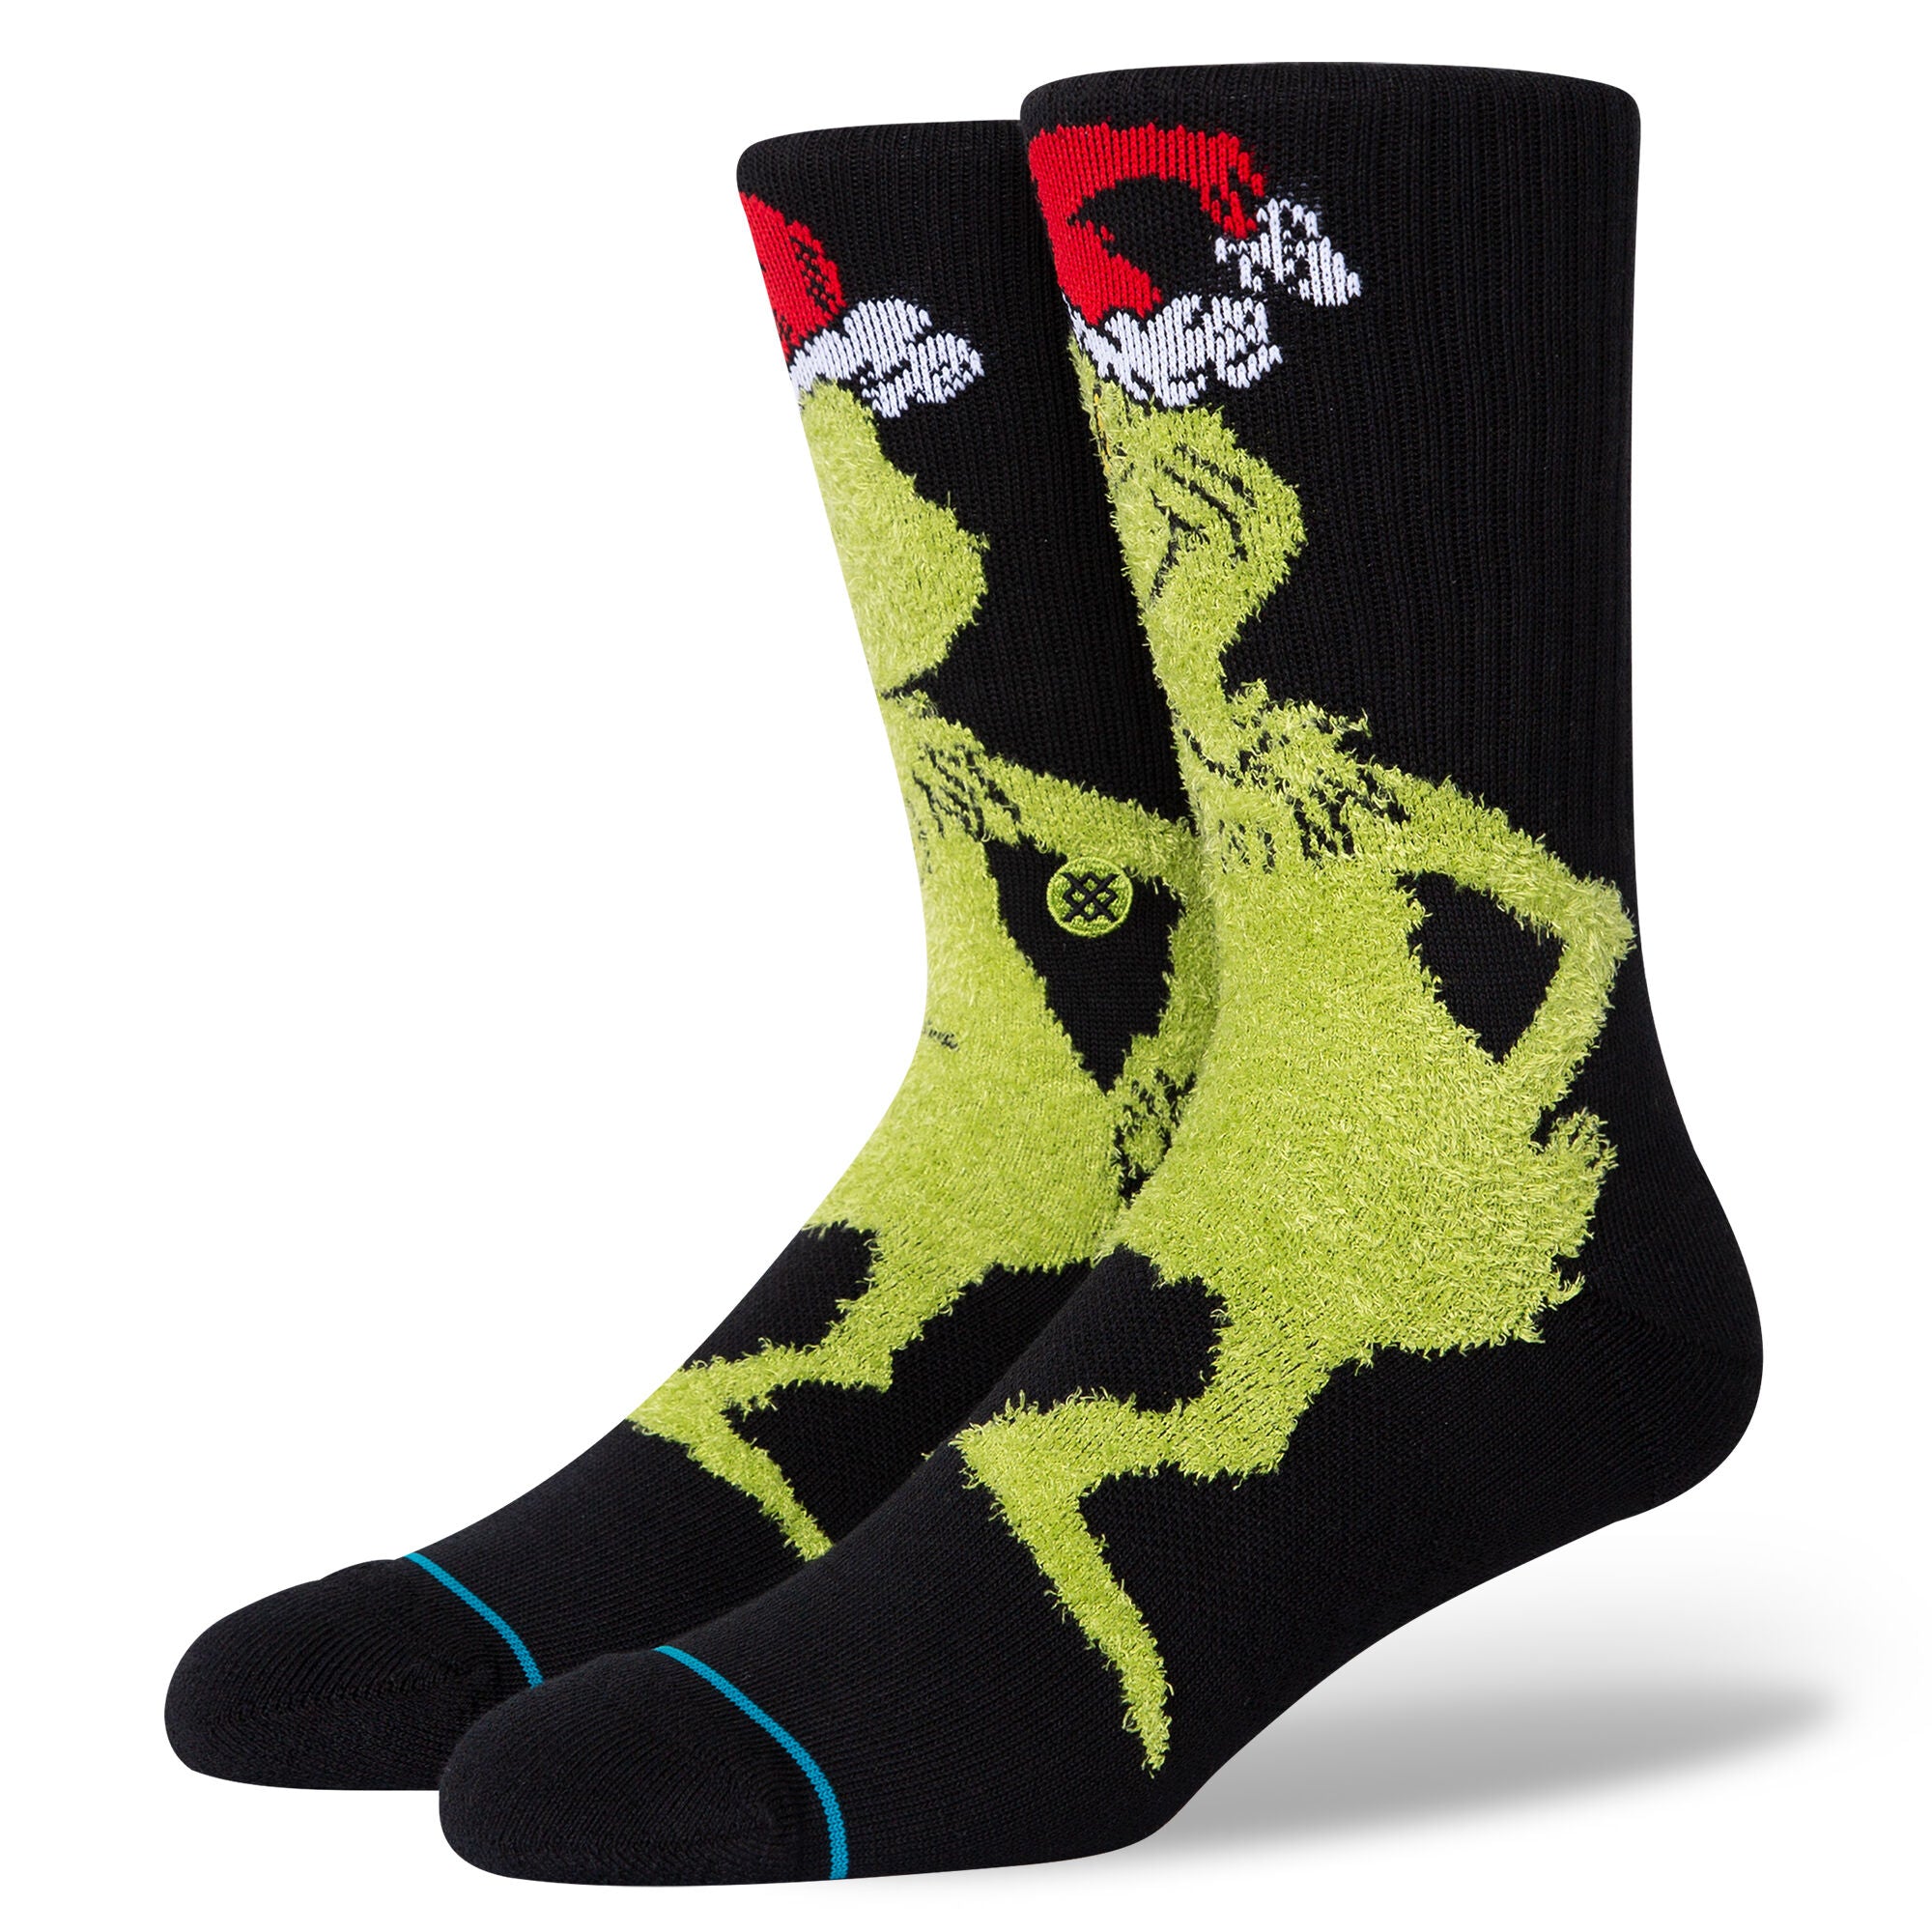 Mr Grinch Sock